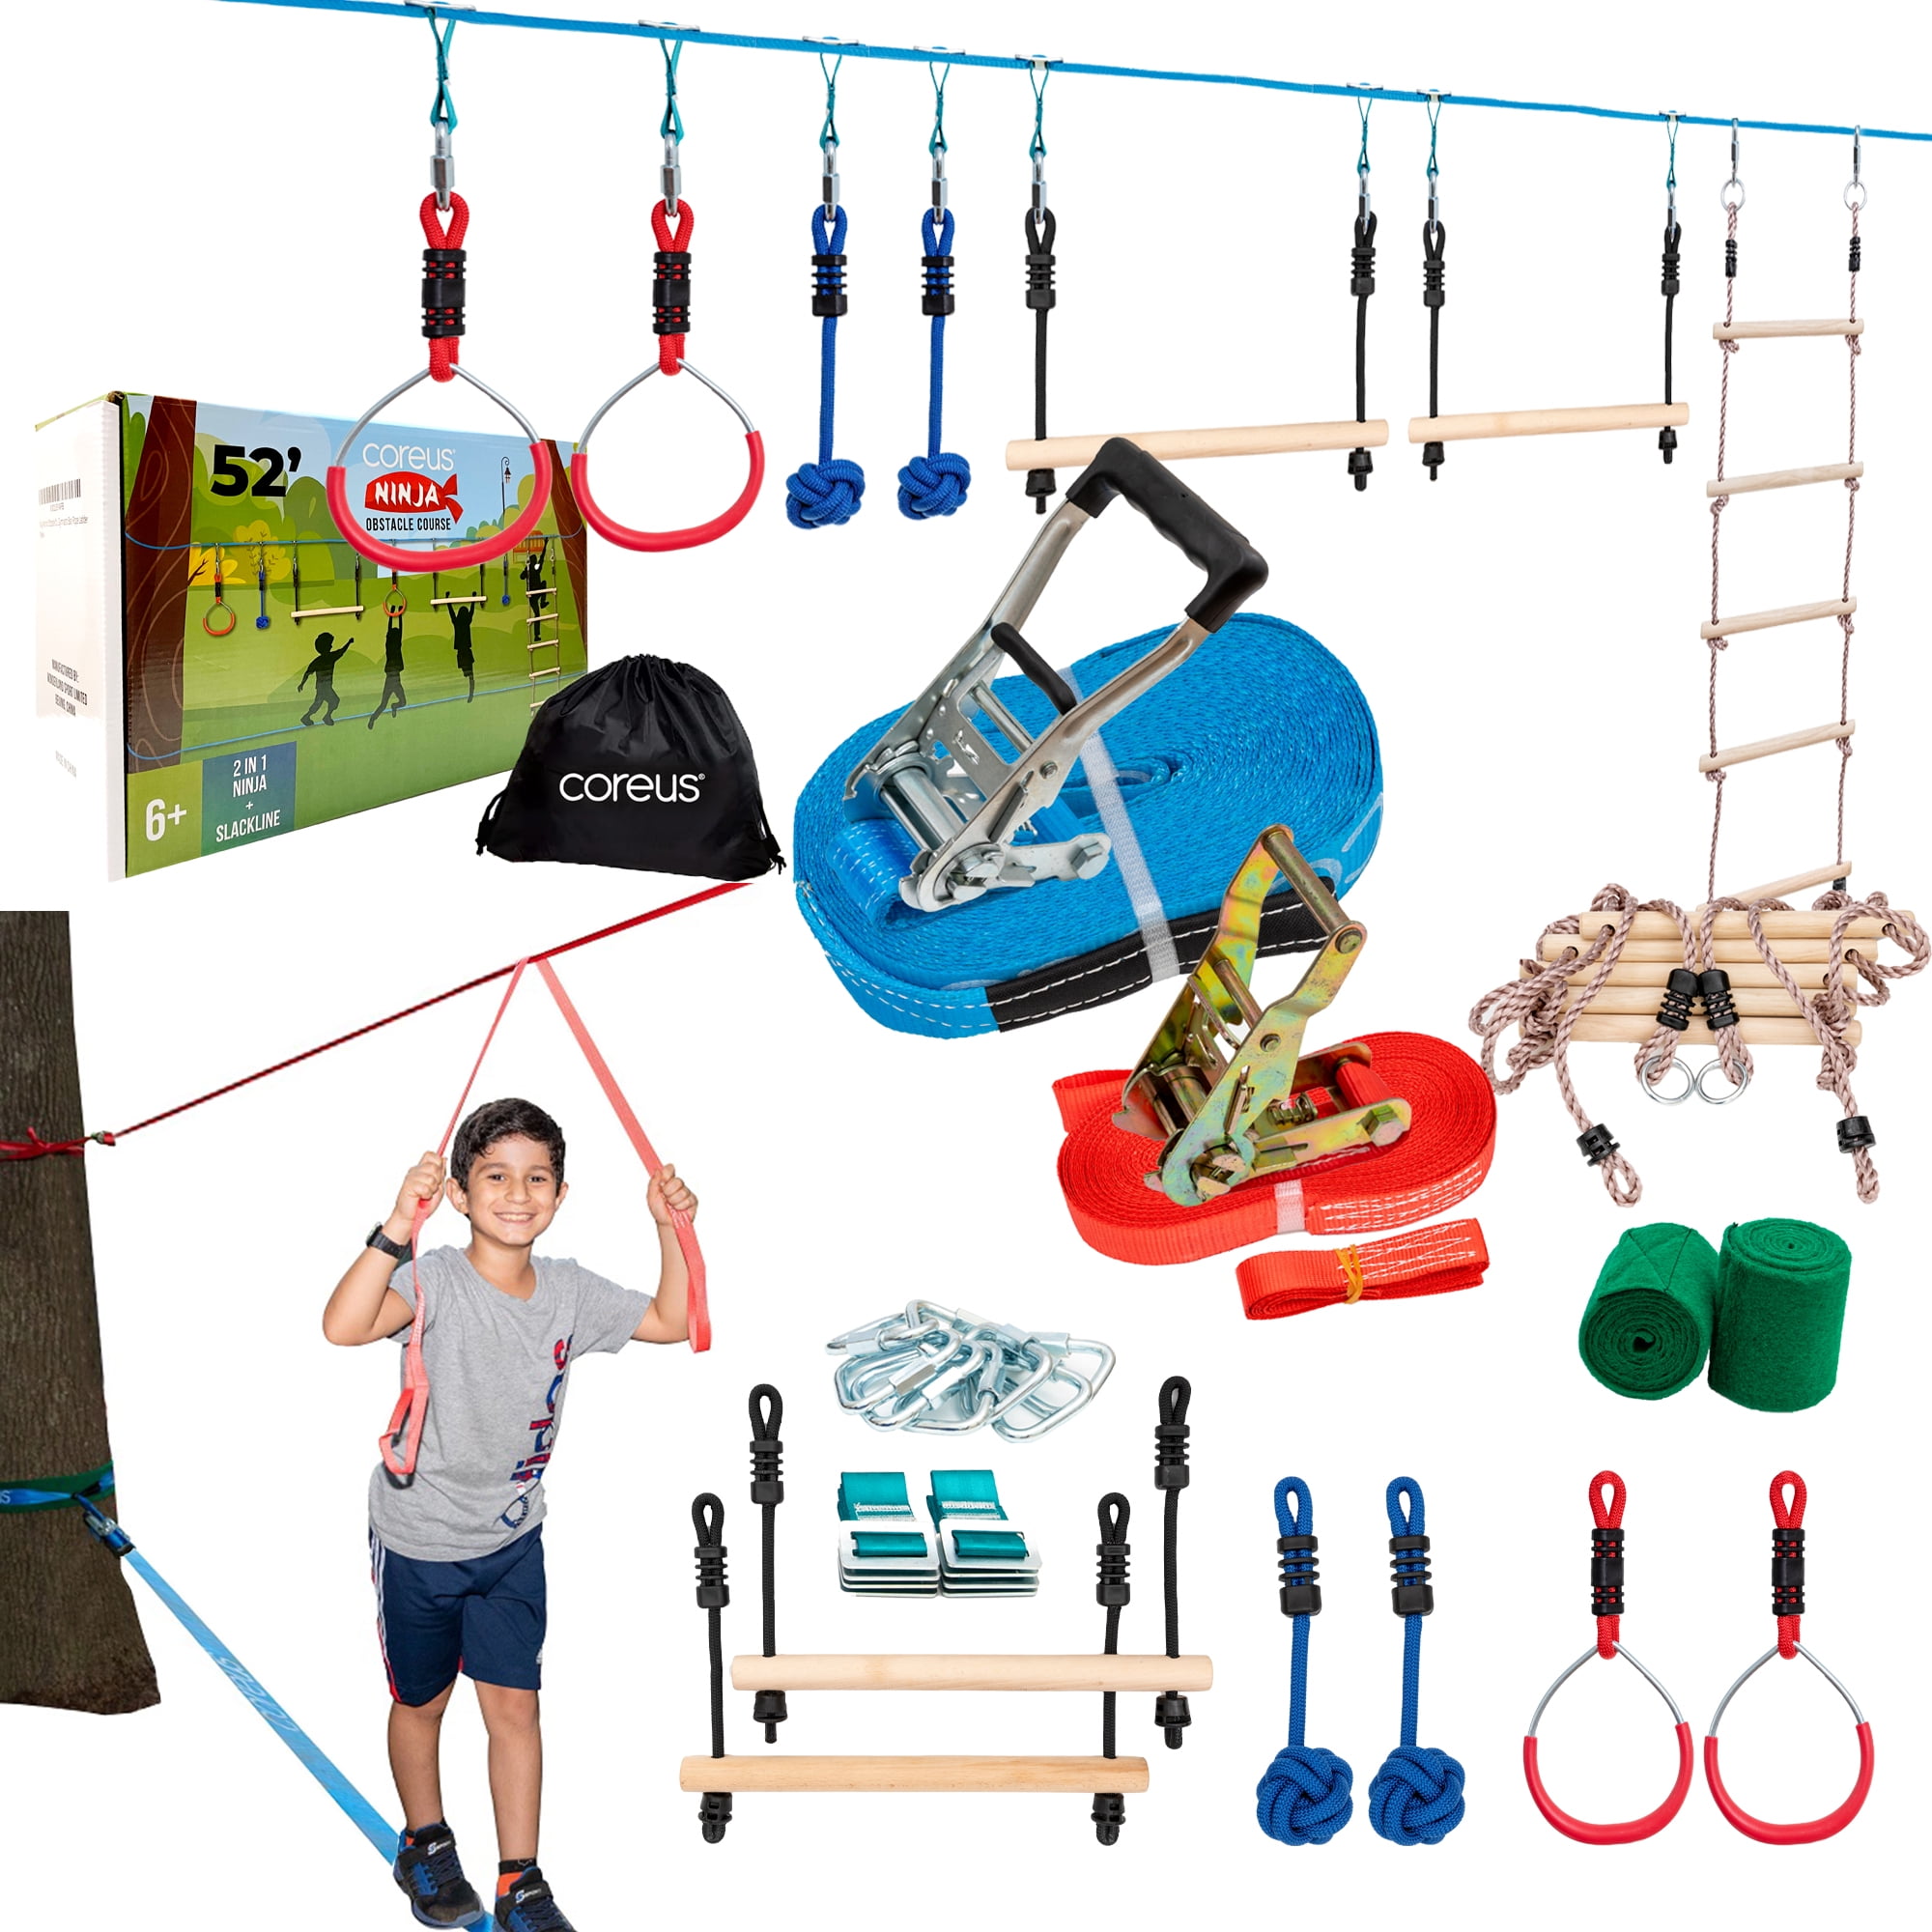 Details about   X XBEN Obstacle Course Kids 50' Slackline Kit Ninja Training Equipment for A... 